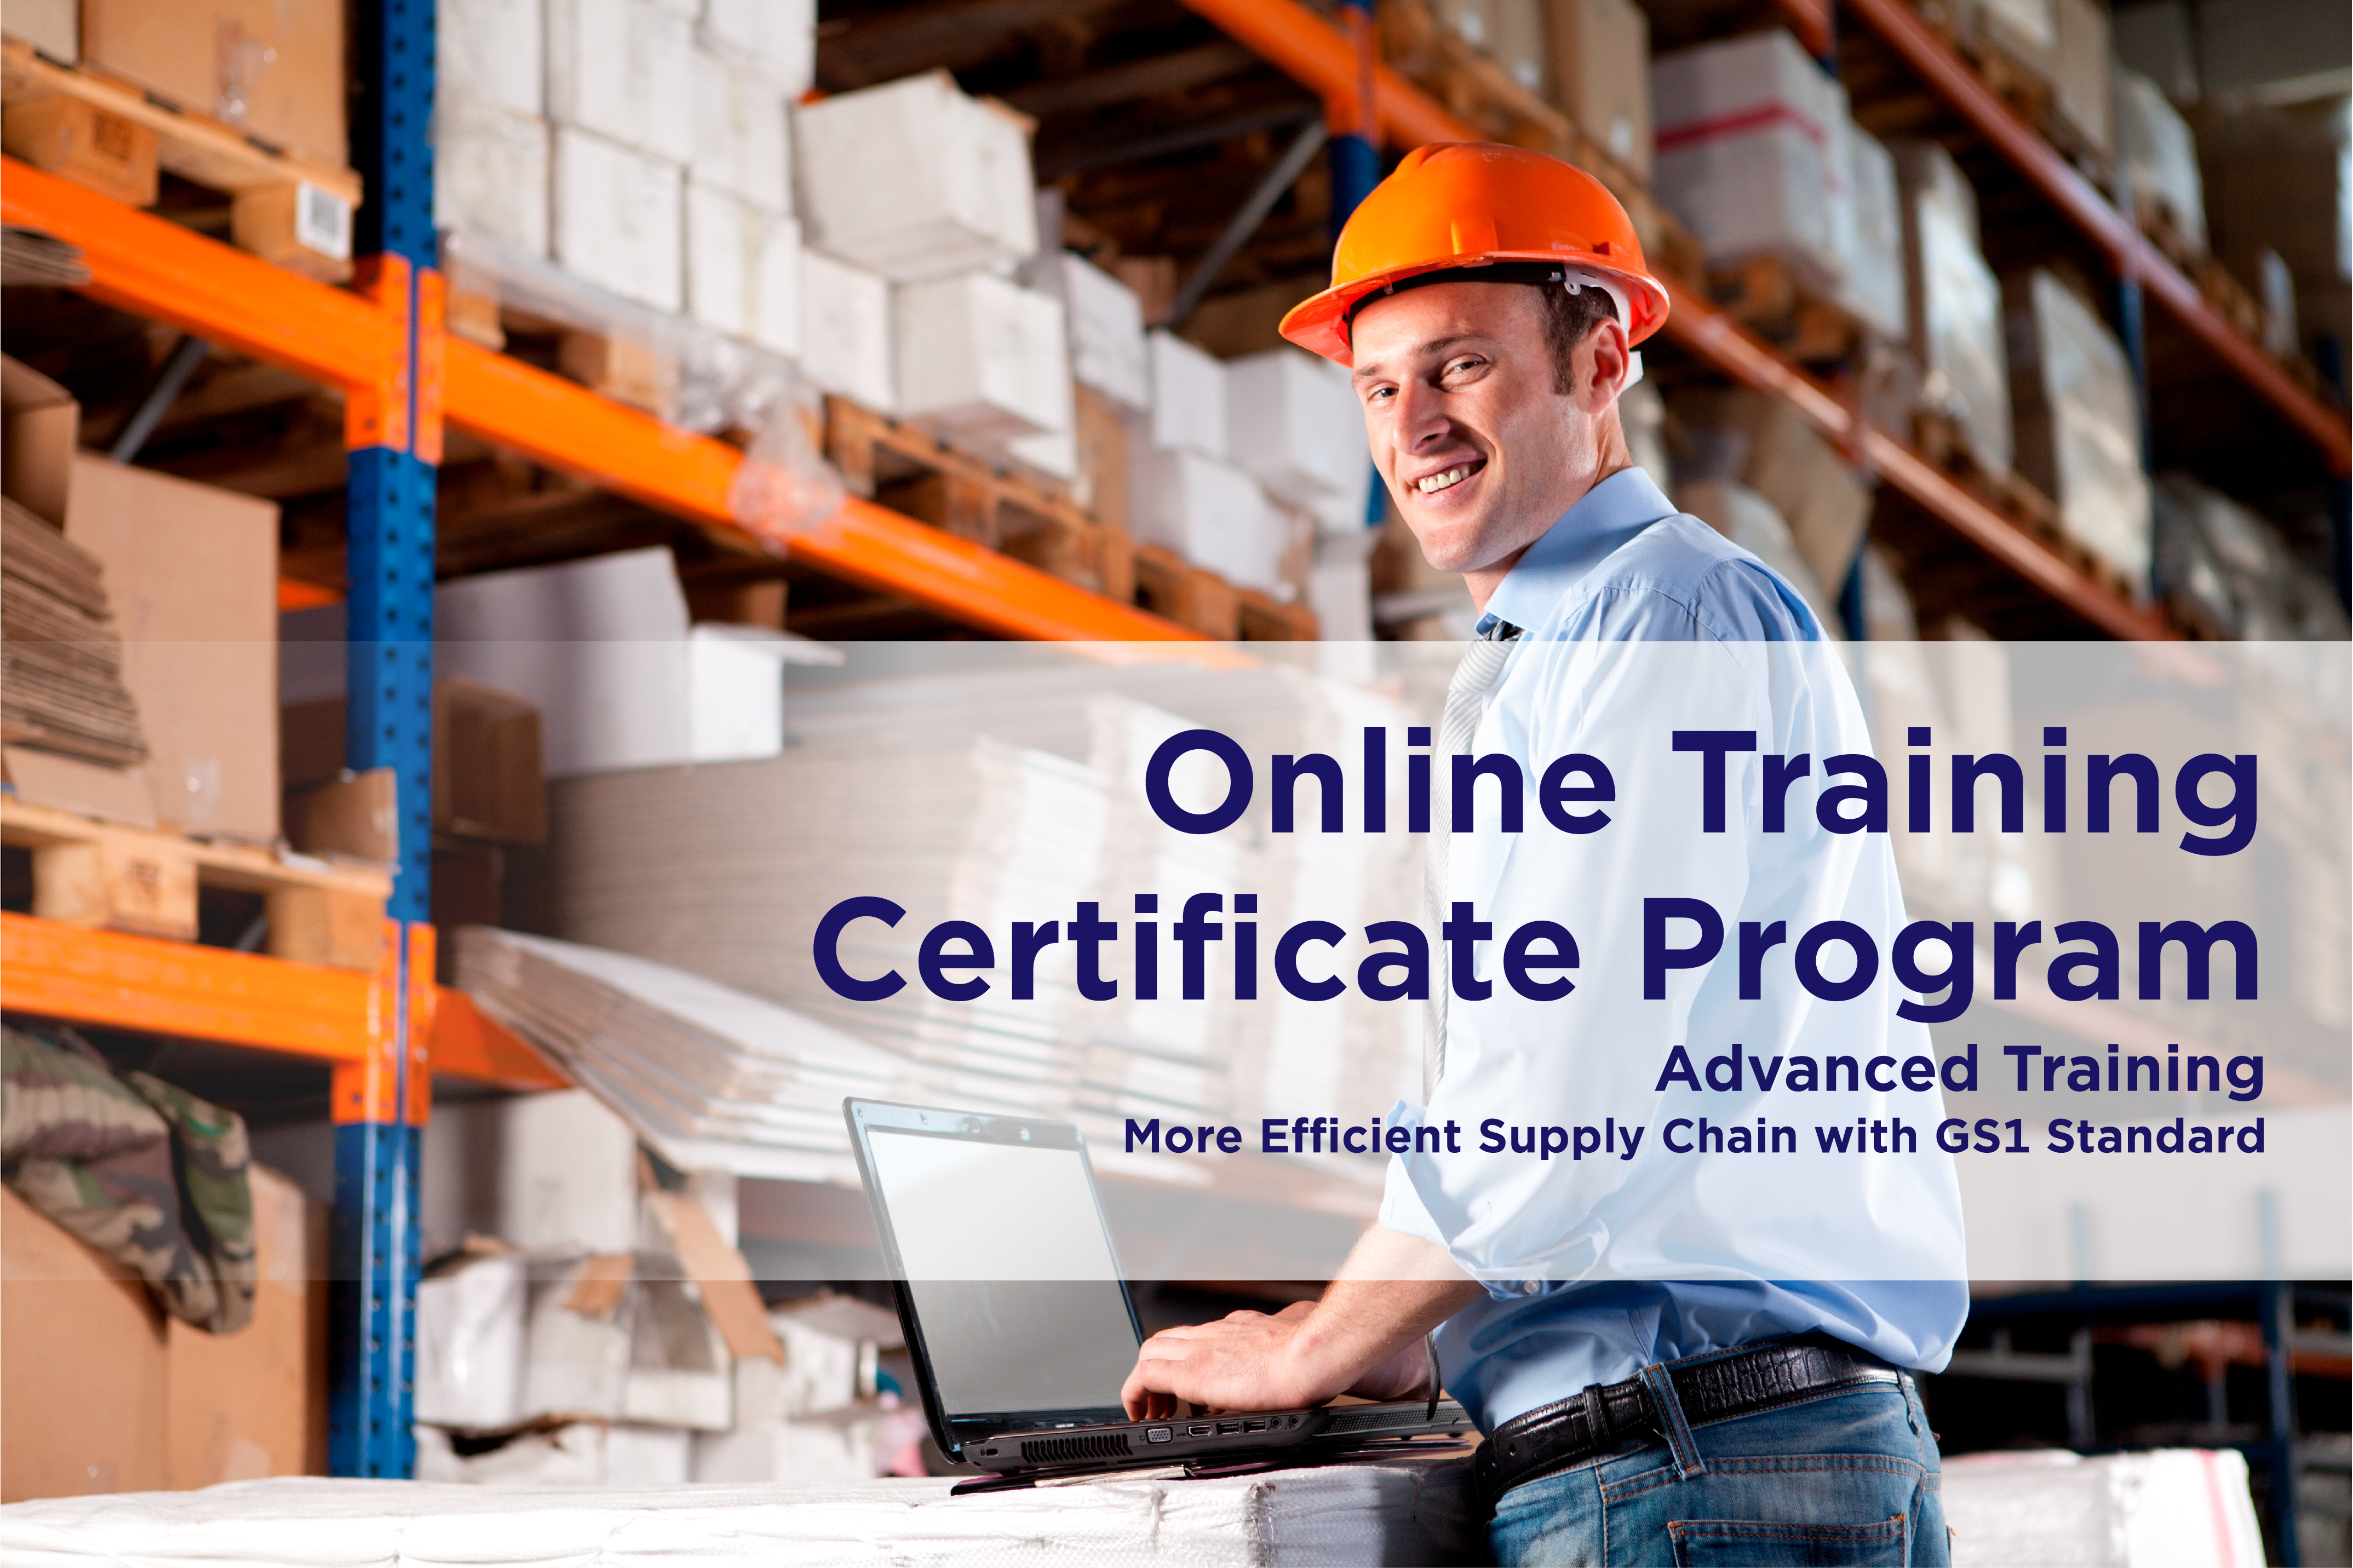 Online Training หลักสูตร Supply Chain ที่มีประสิทธิภาพดียิ่งขึ้นด้วยมาตรฐานสากล GS1 – More Efficient Supply Chain with GS1 Standard (Advanced Training – Certificate Program)